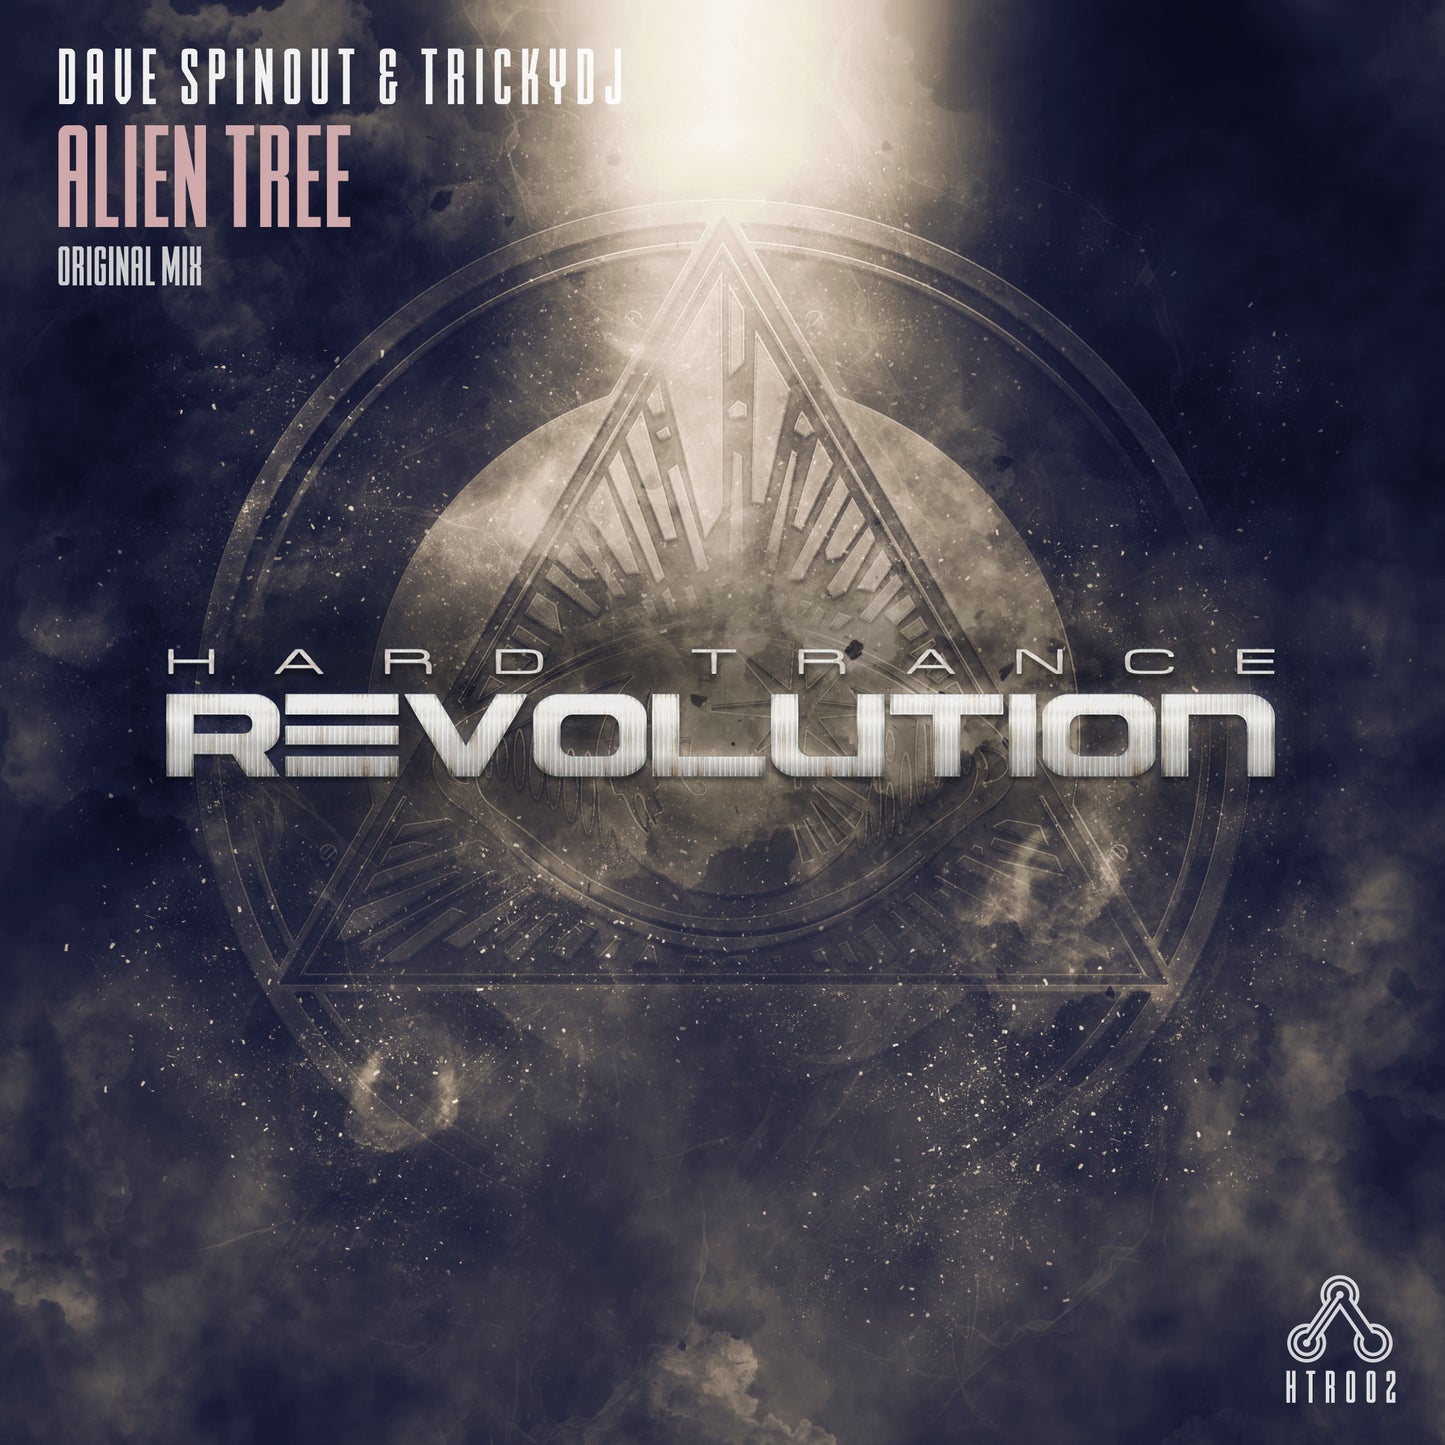 HTR002 - Dave Spinout & TrickyDJ - Alien Tree (Extended Mix)